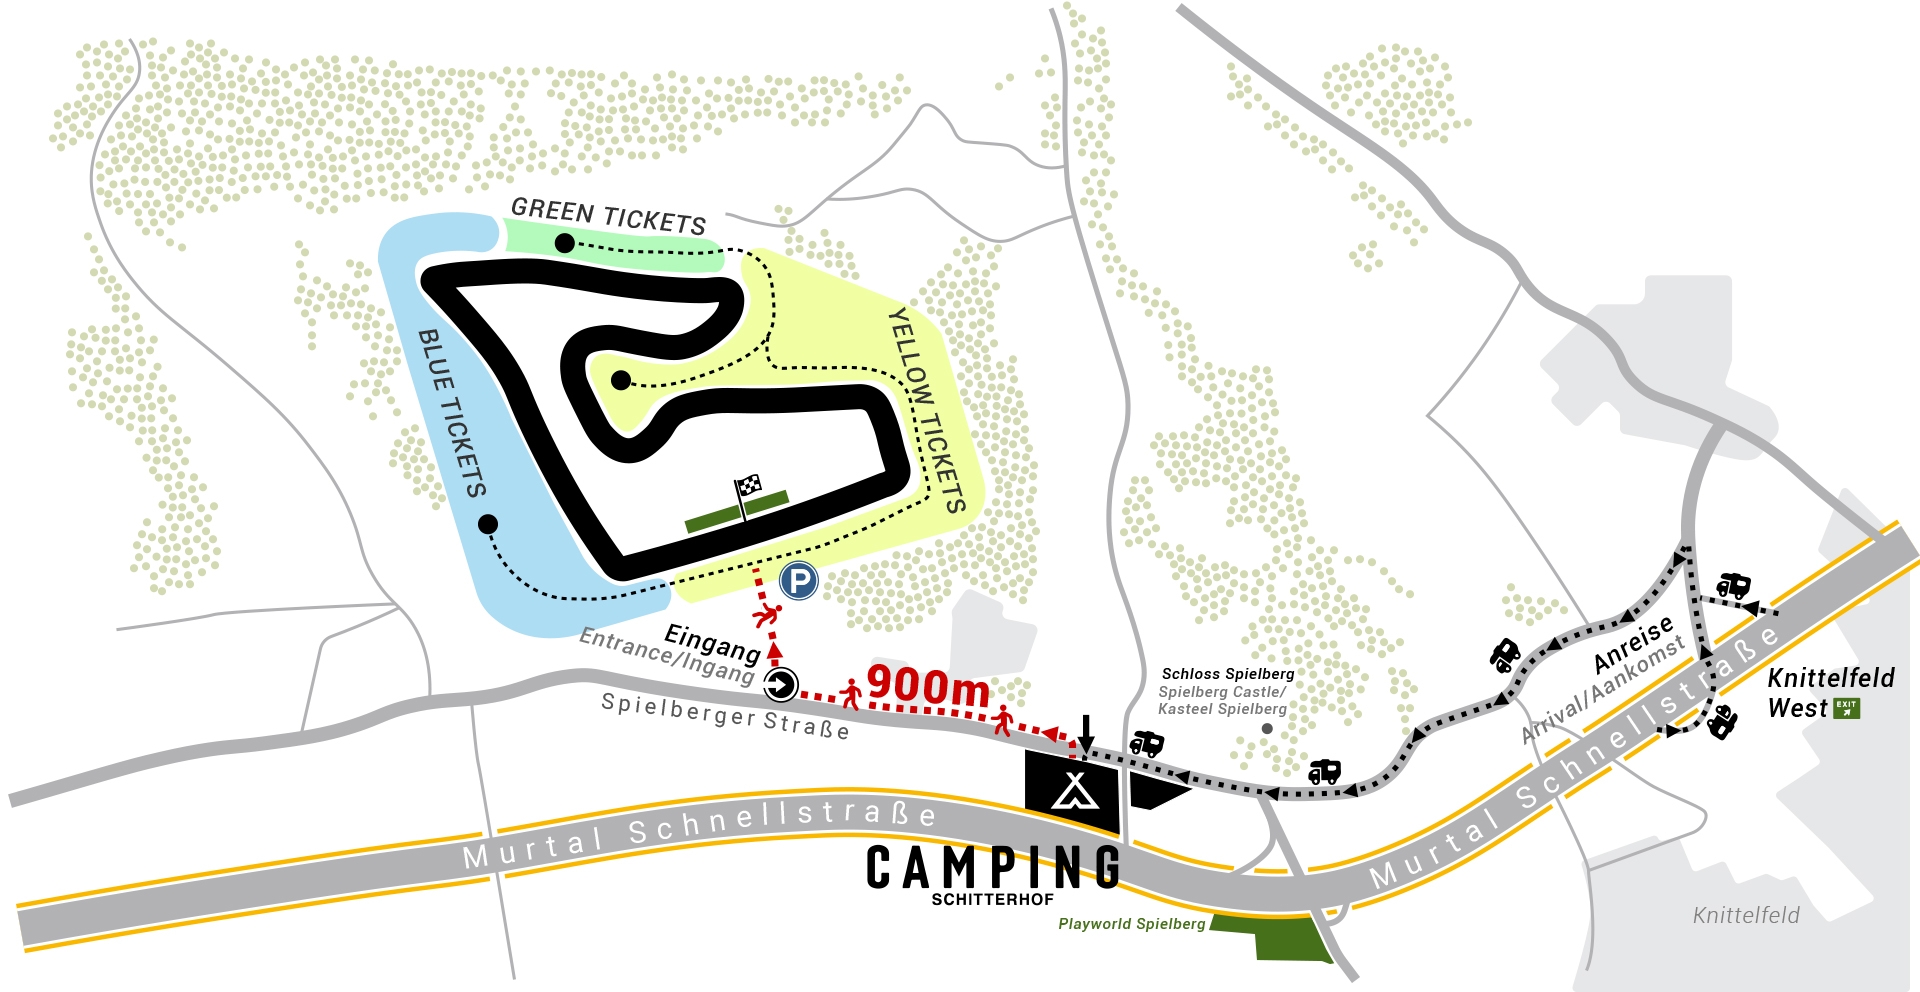 Camping aankomst voor F1 en MotoGP